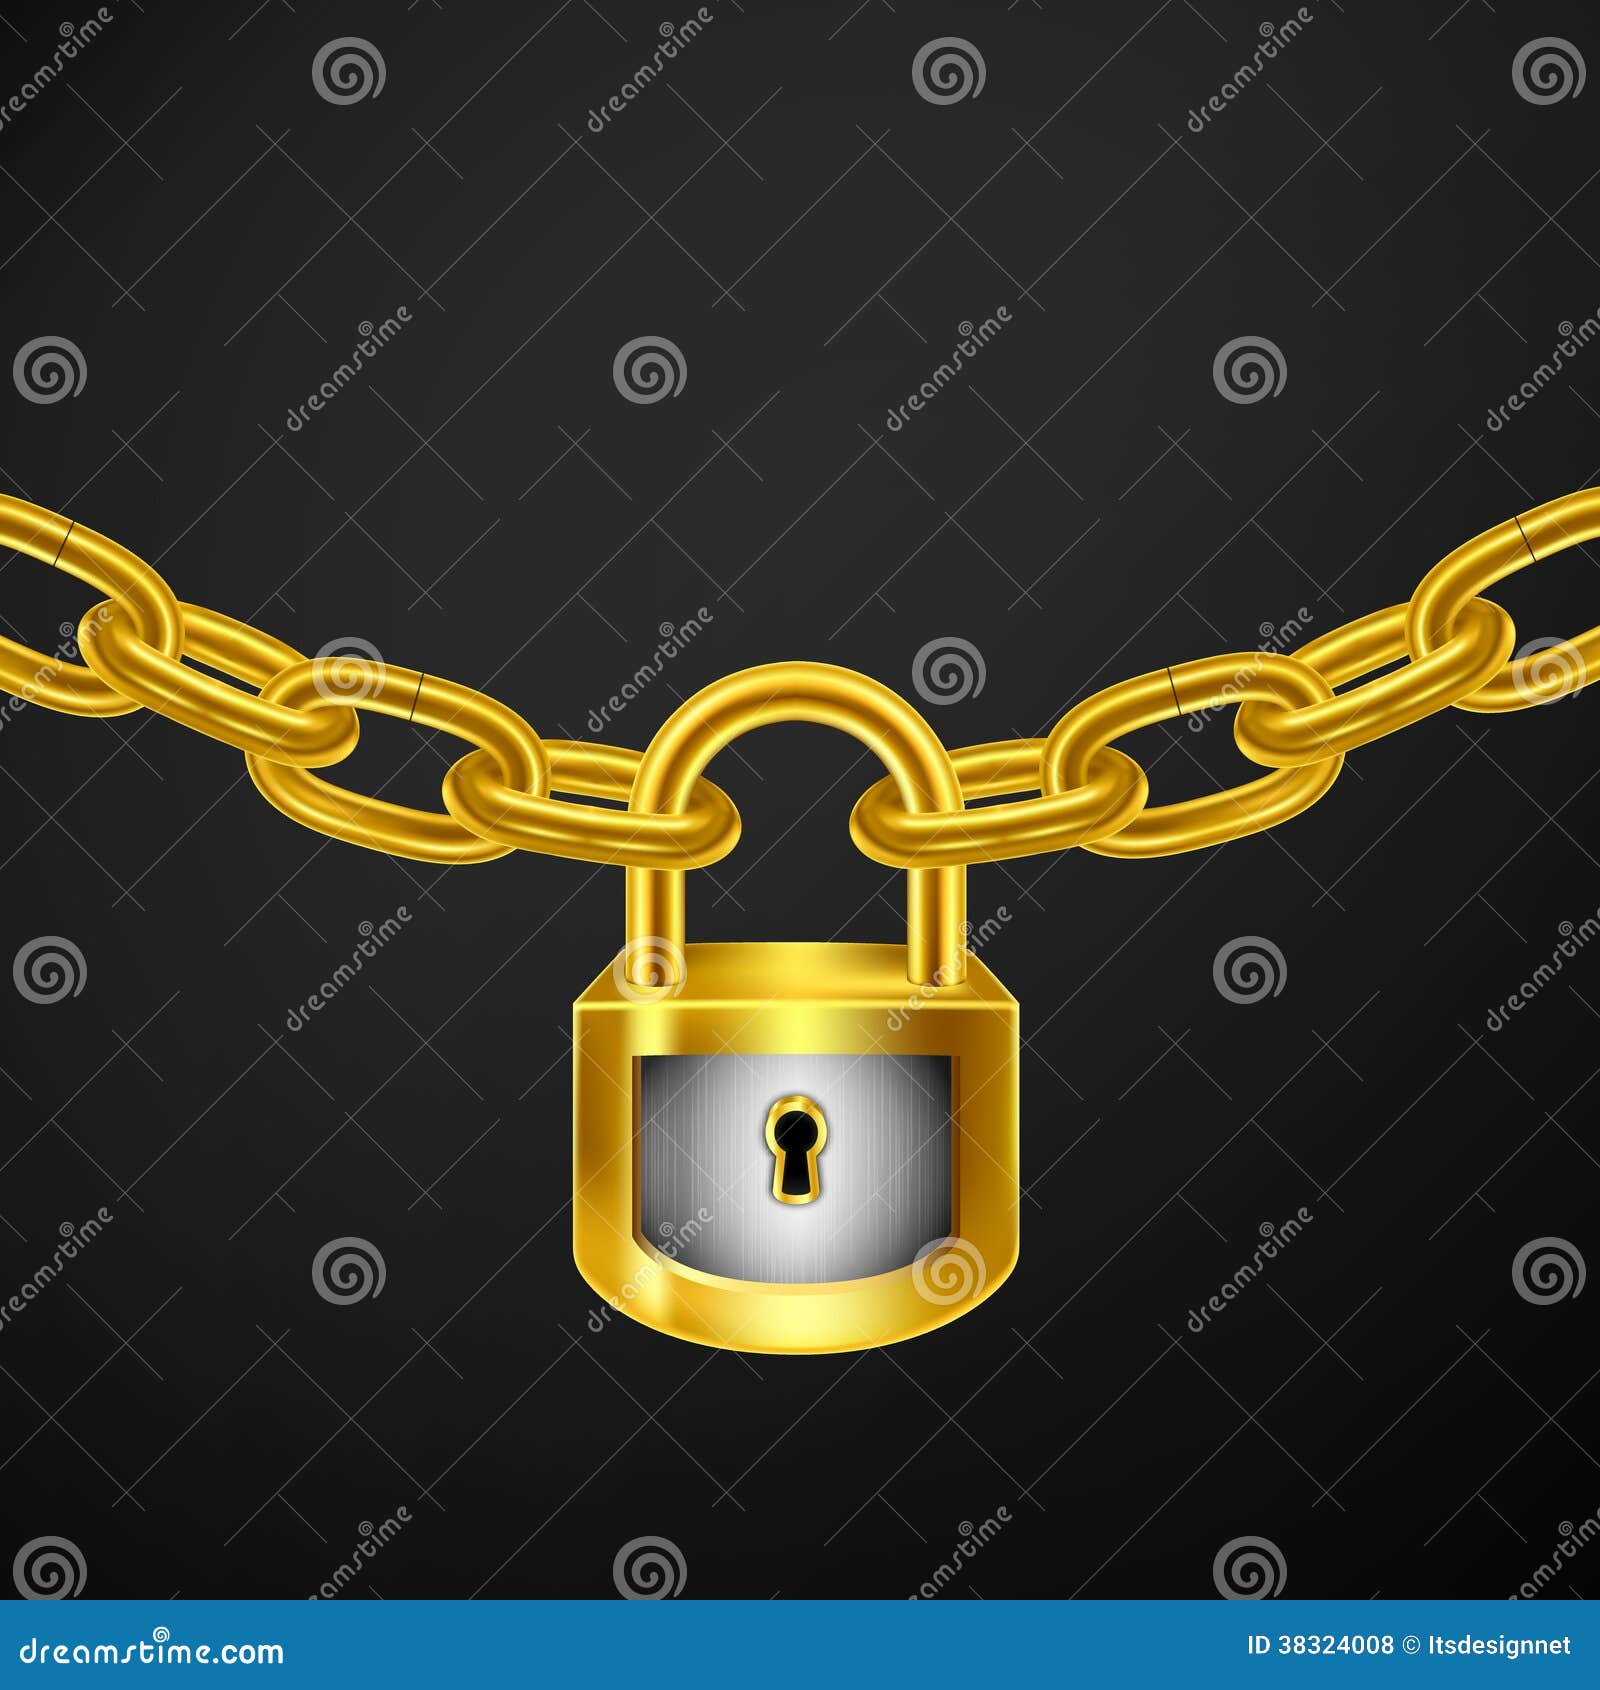 Lock chain gold, Stock vector